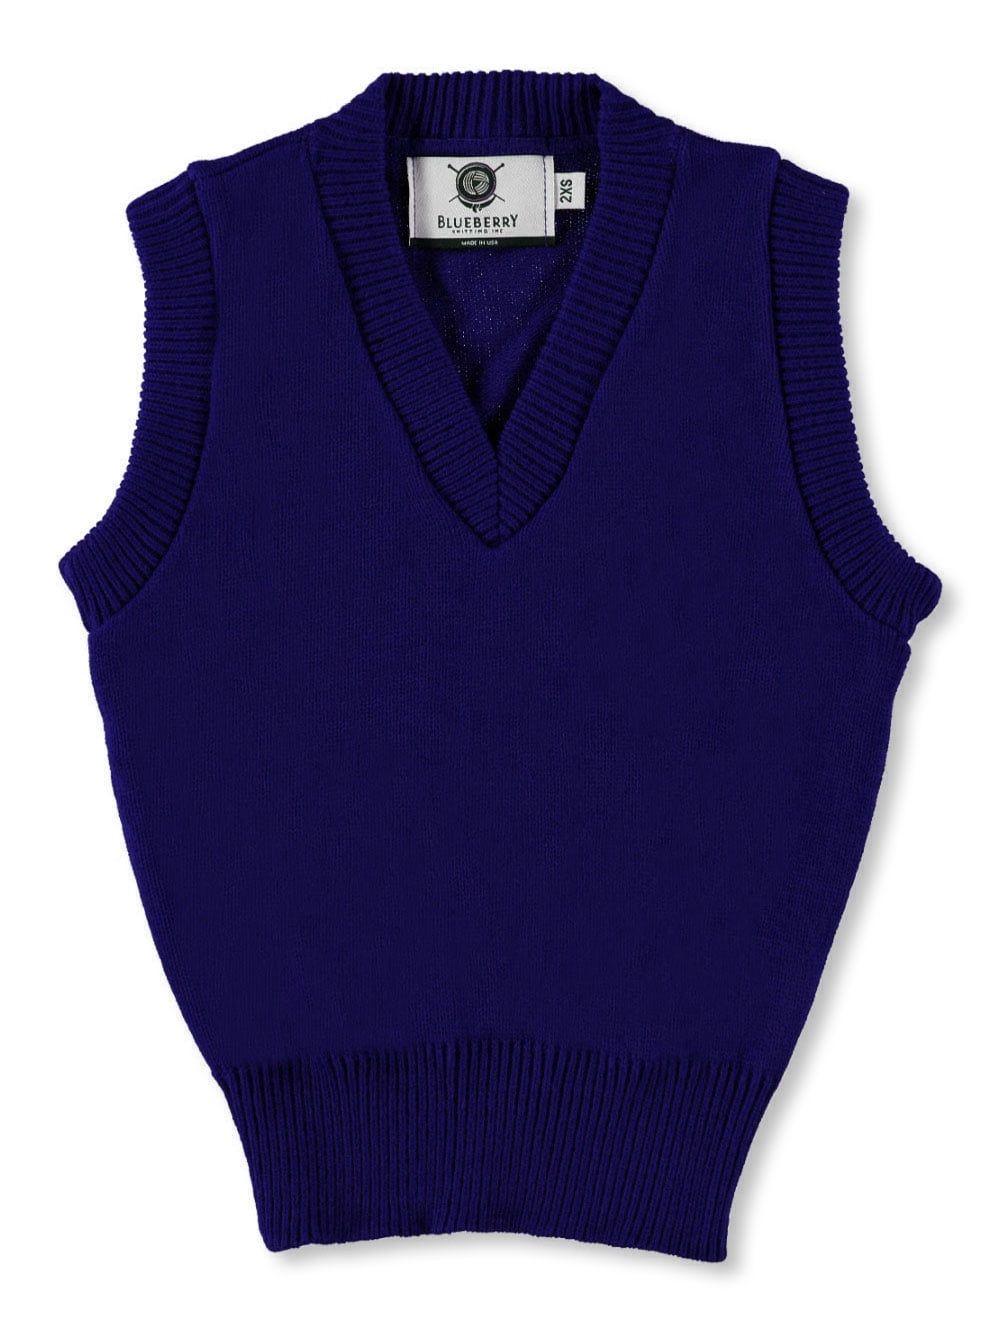 Blueberry Knitting - Blueberry Knitting Adult Unisex V-Neck Sweater ...